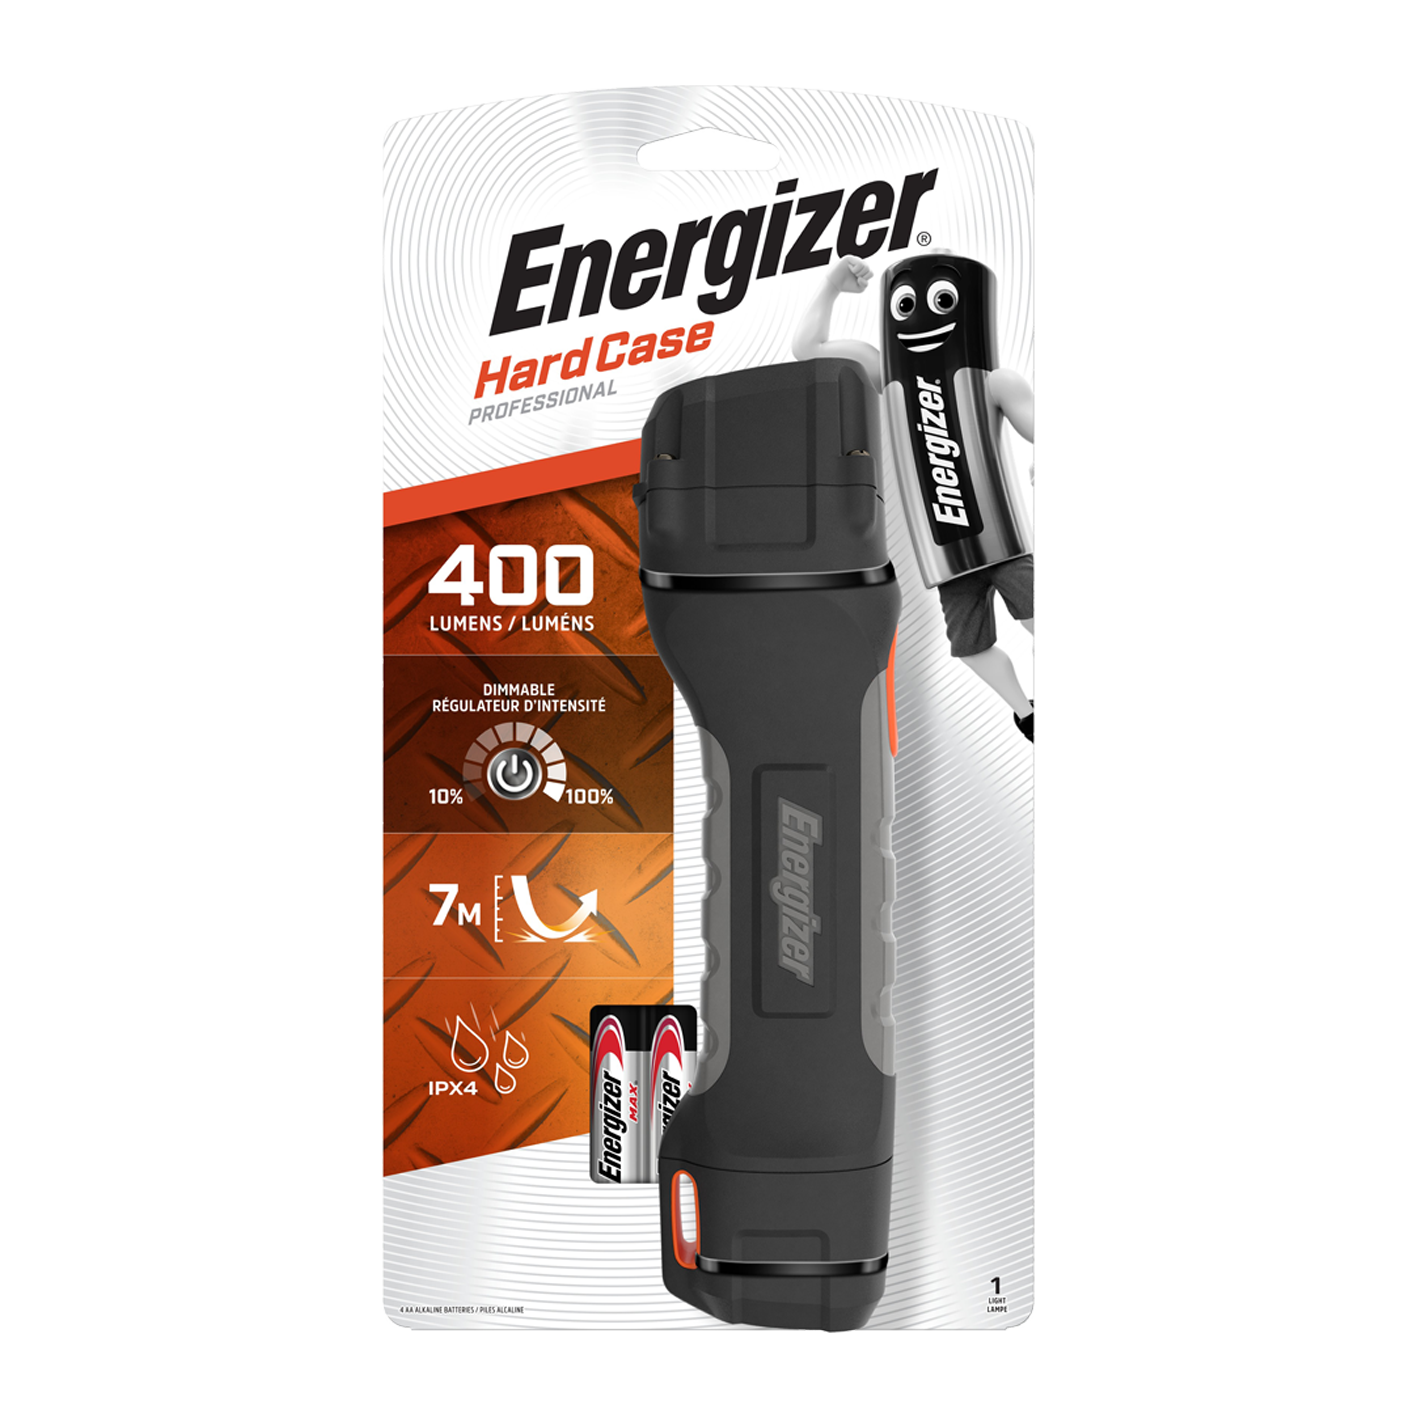 Energizer Hardcase LED 400 Lumen Project Plus Taschenlampe mit 4 x AA-Batterien